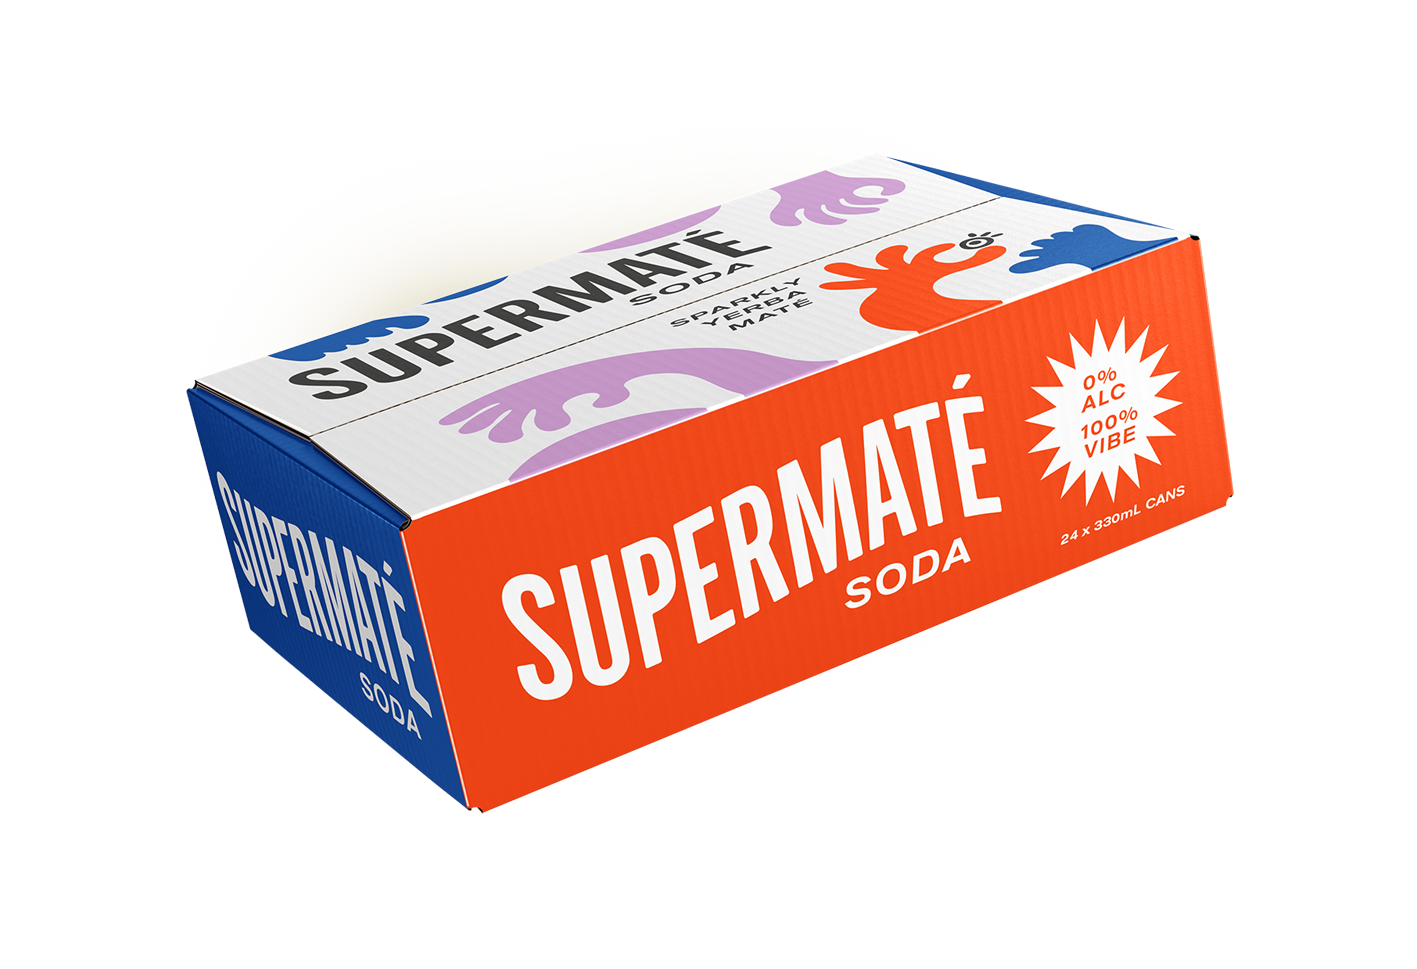 Supermaté Soda 24 x 330ml